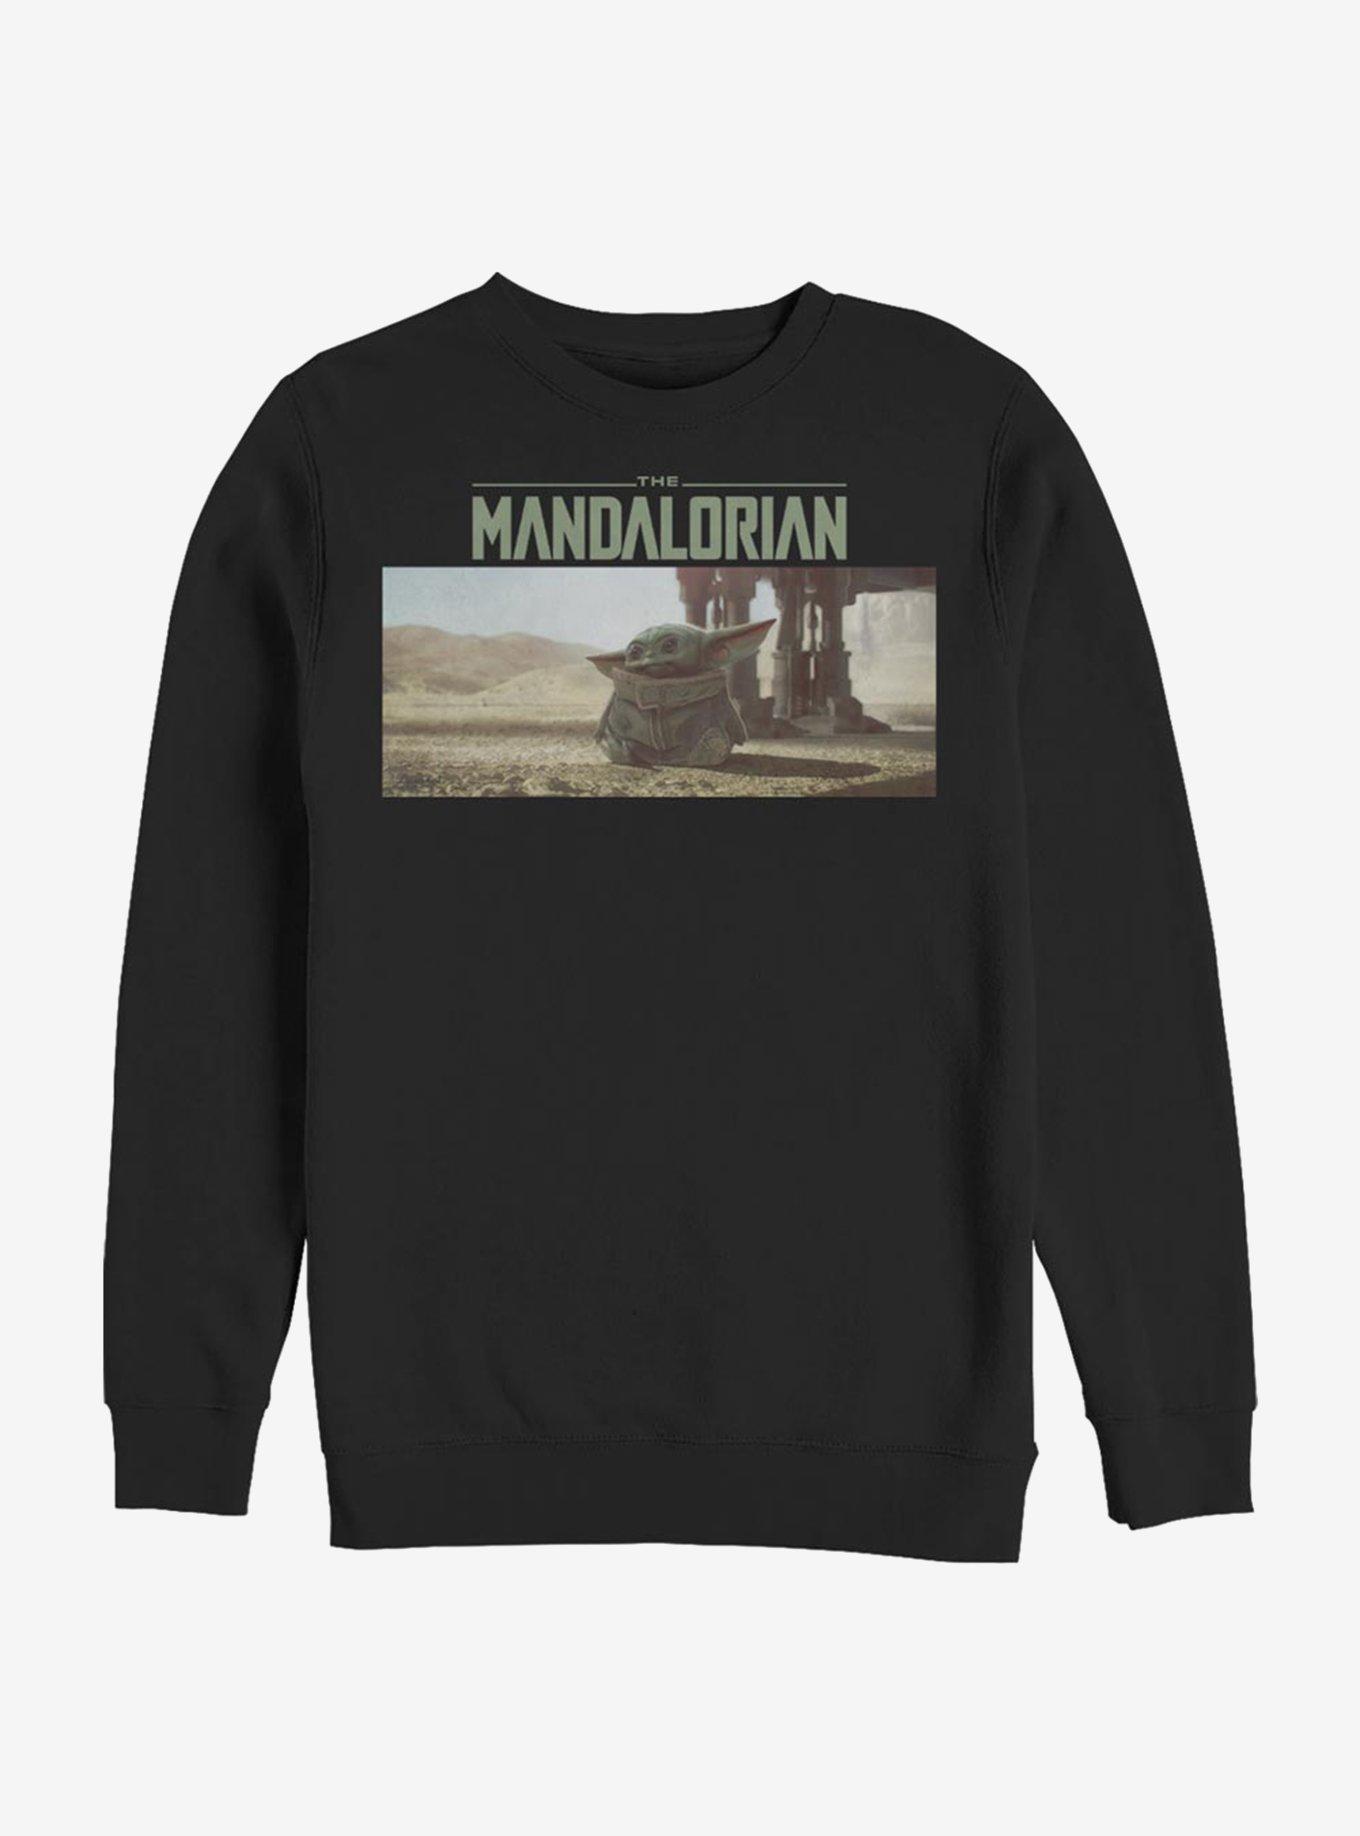 Star Wars The Mandalorian The Child Still Looking Sweatshirt, BLACK, hi-res